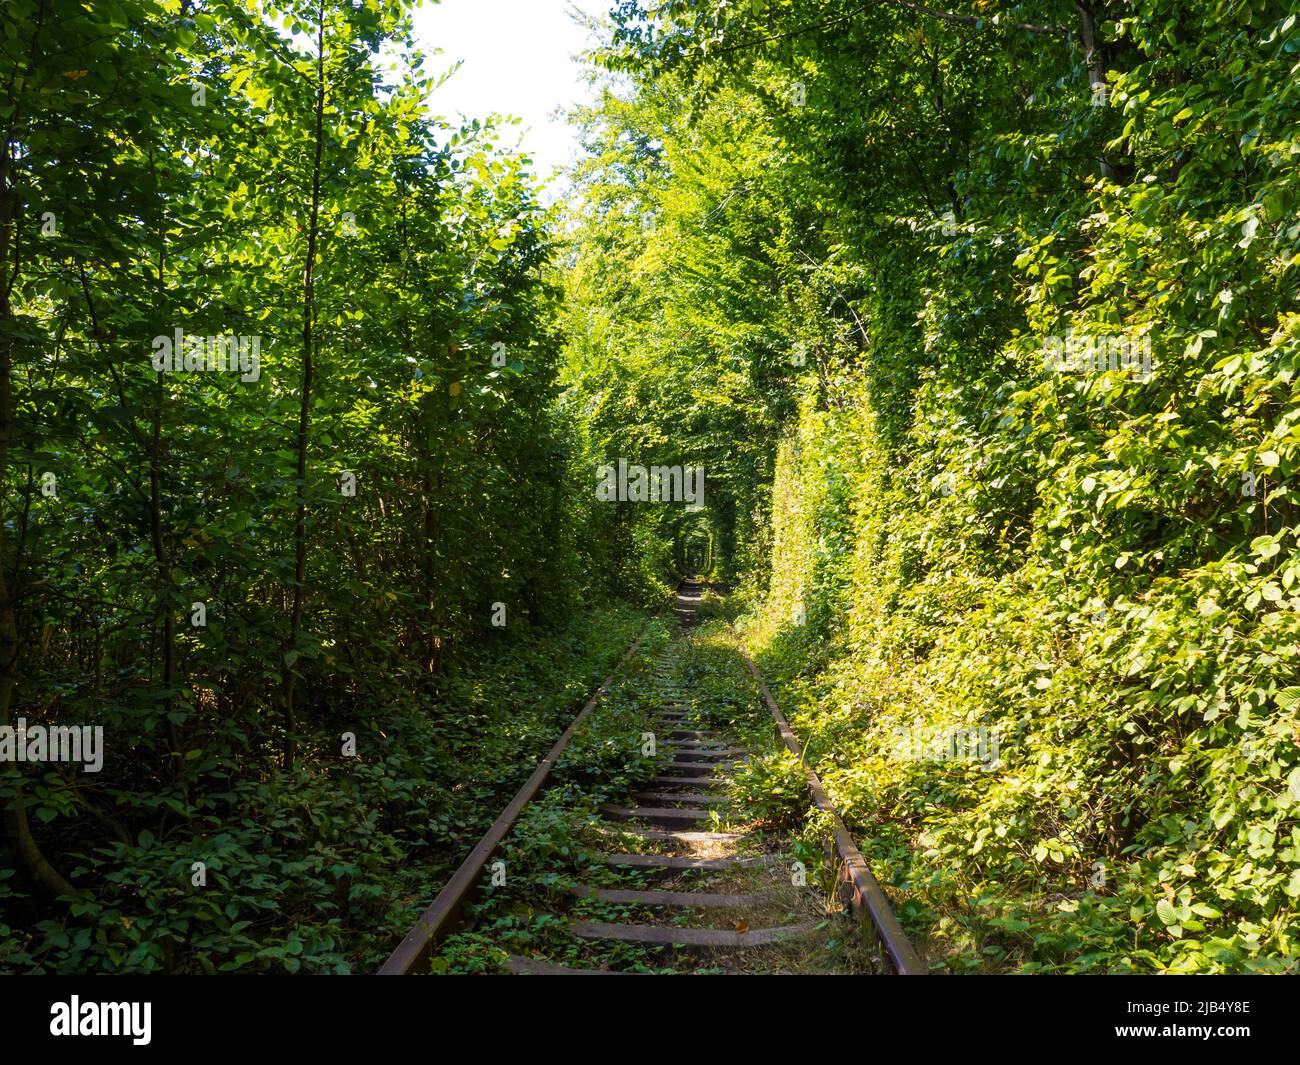 Scenic railway in the summer forest. Tunnel of love in Klevan, Ukraine Stock Photo